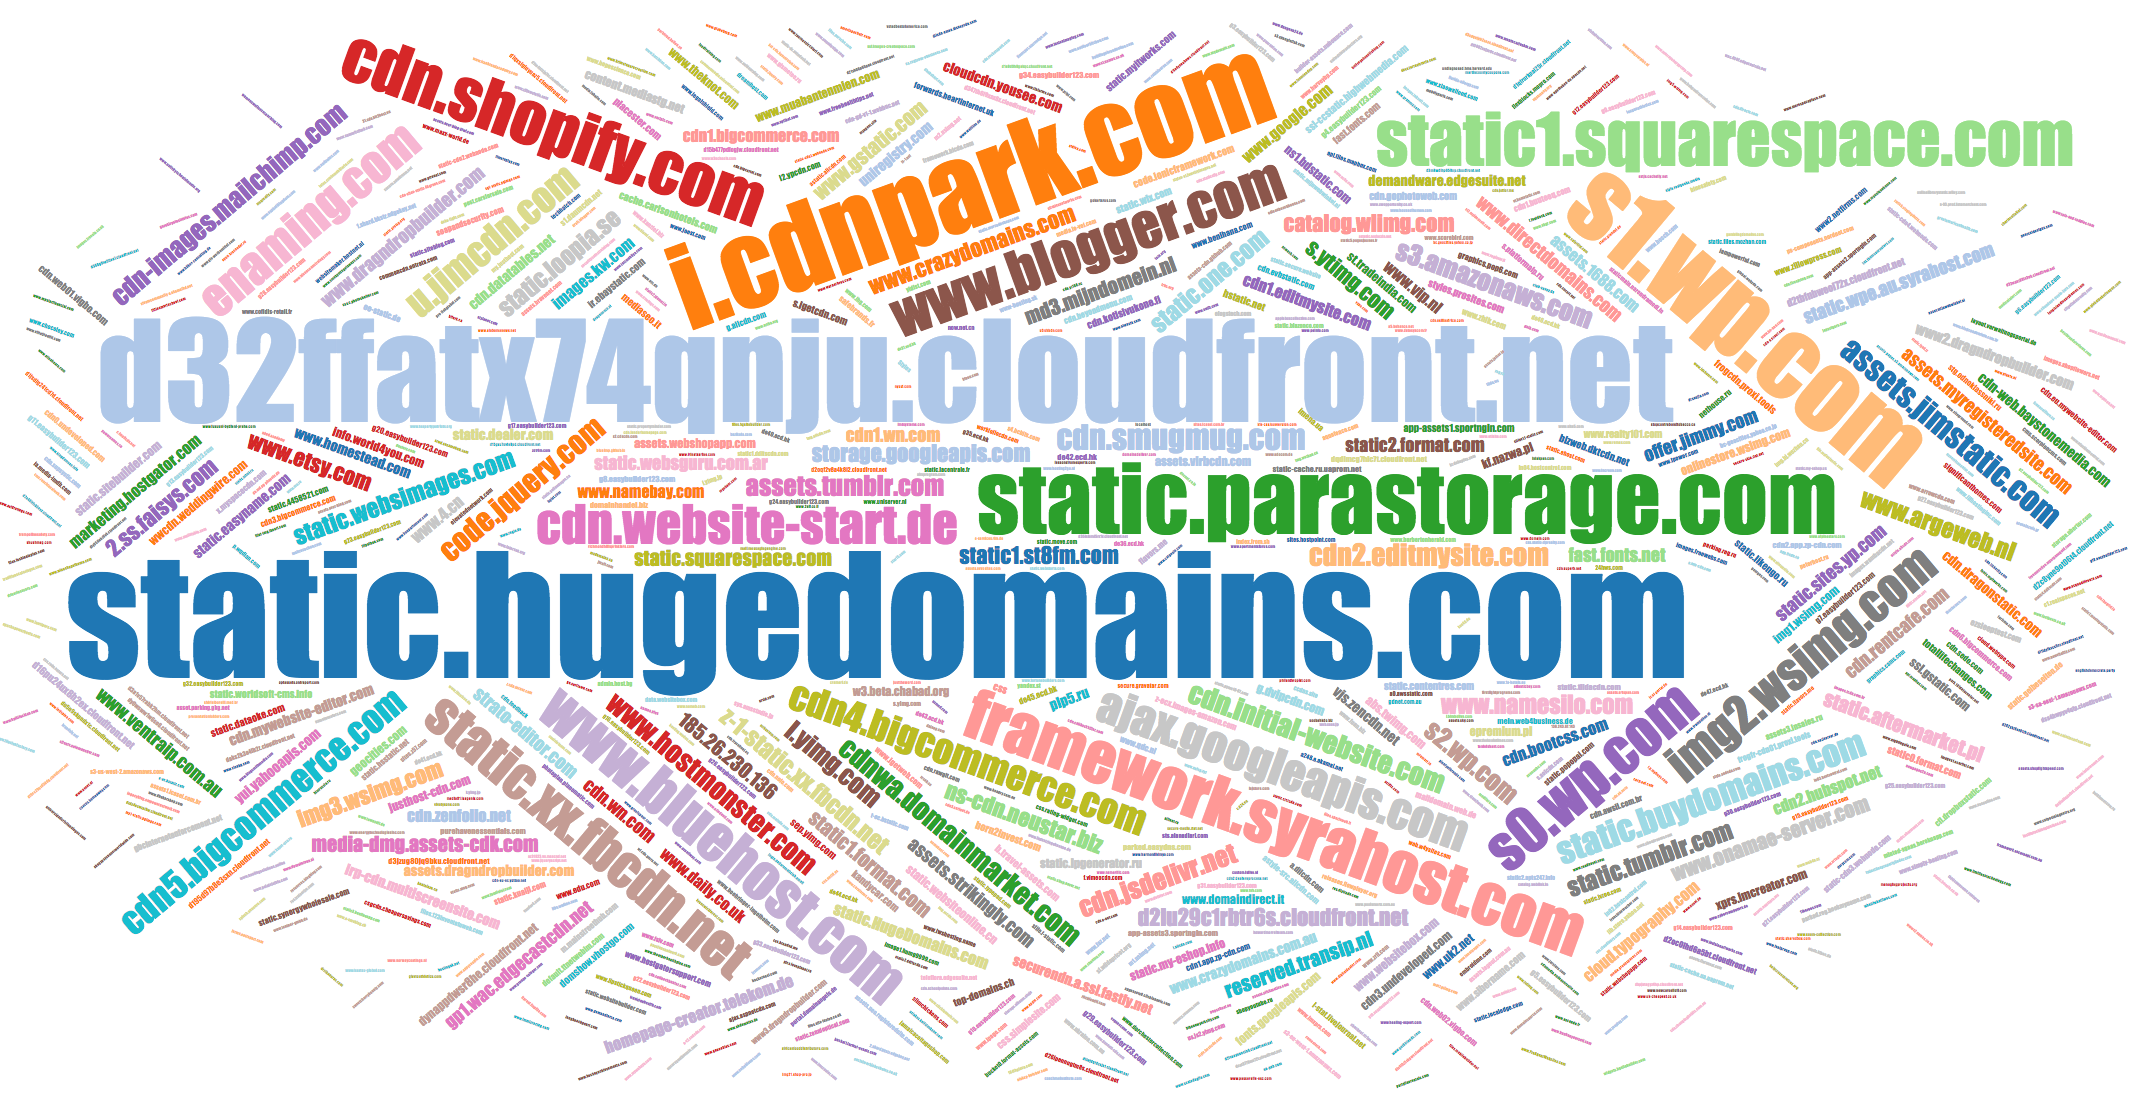 Popular names of CSS domains yui.yahooapis.com, yldist.com, etc.